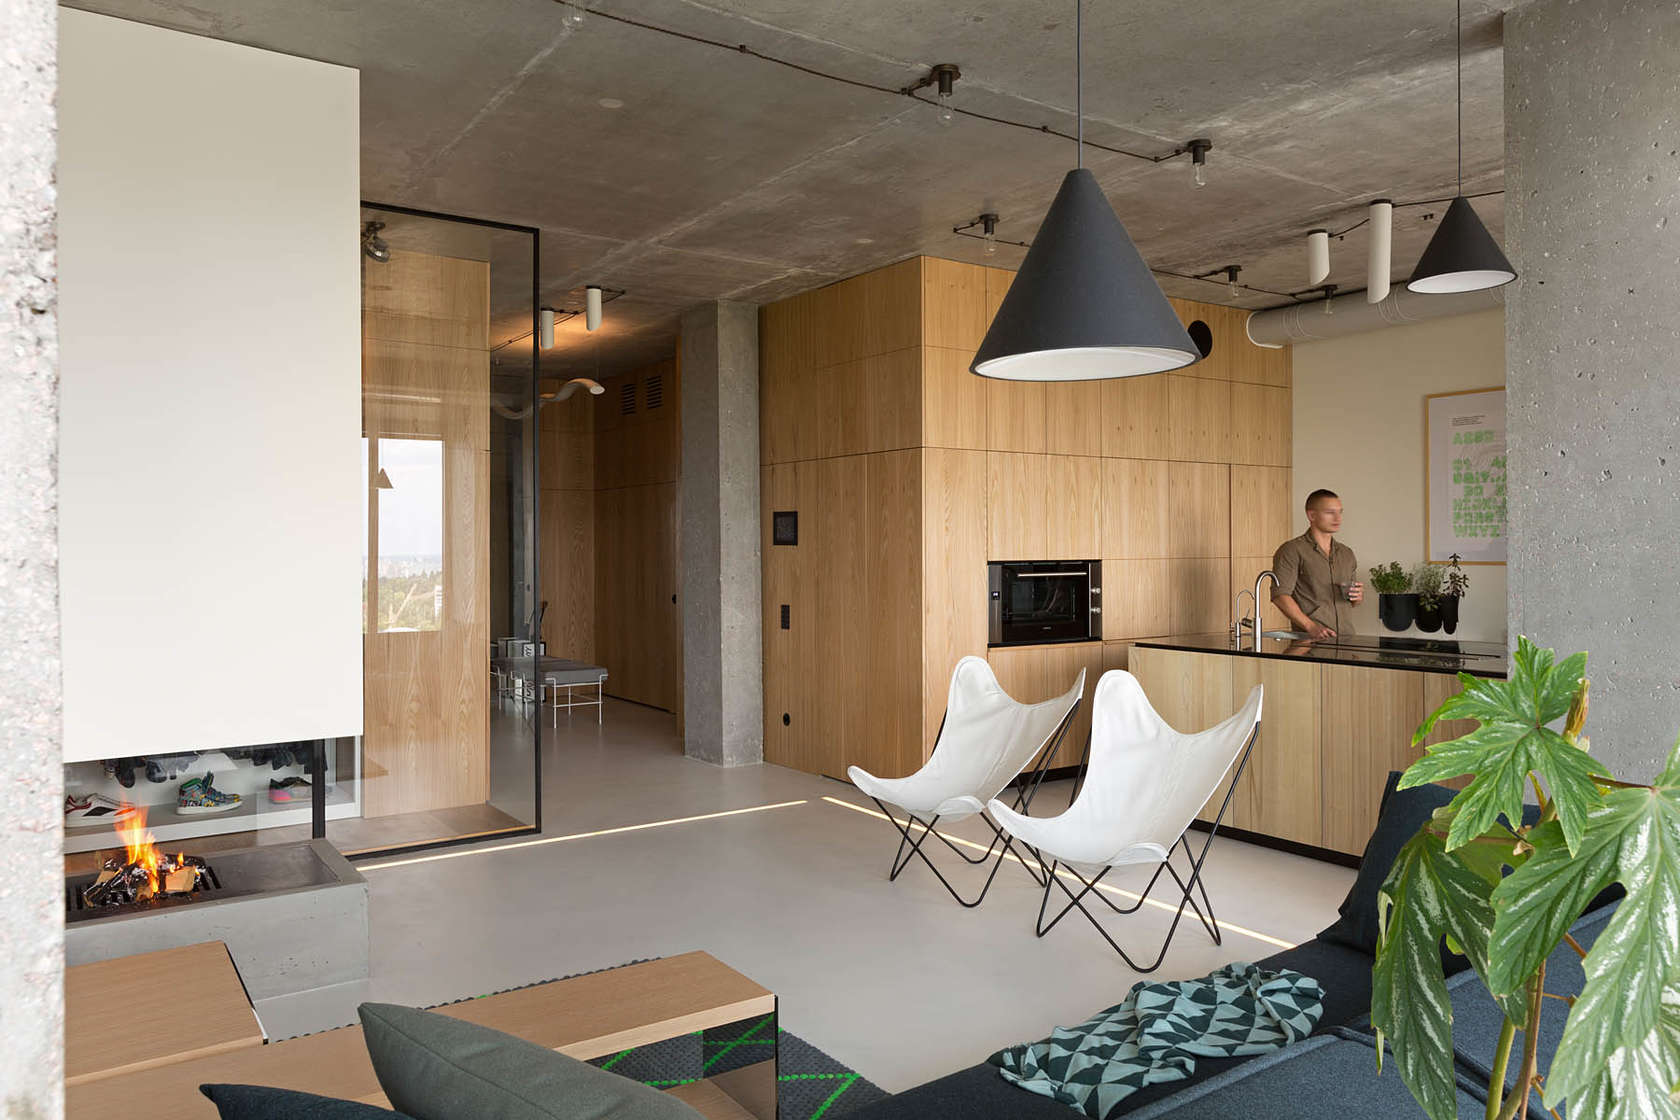 Inspiring penthouse design with minimalist concept